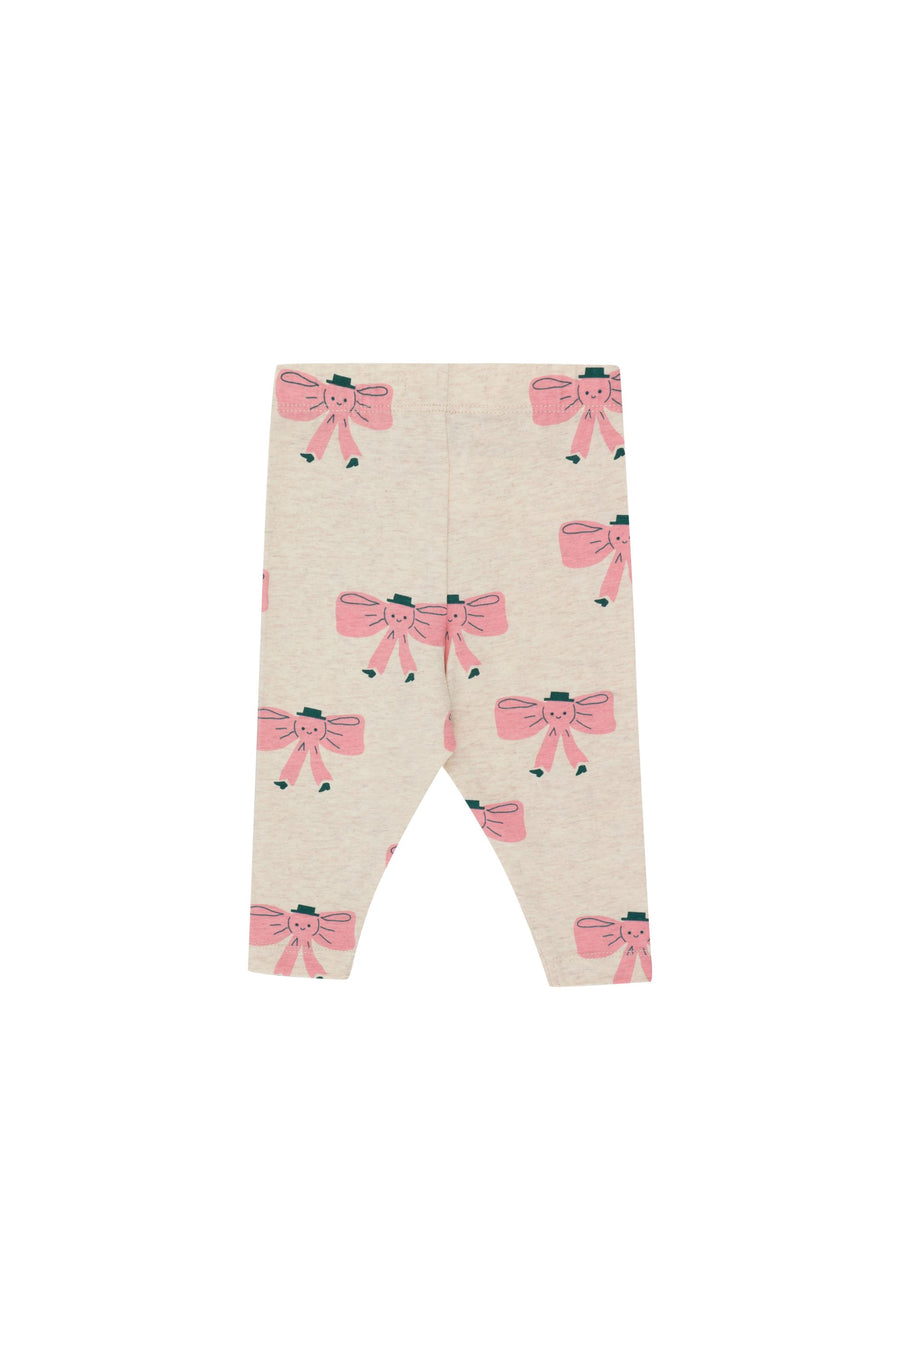 Tiny Cottons - bow baby pants - light cream heather